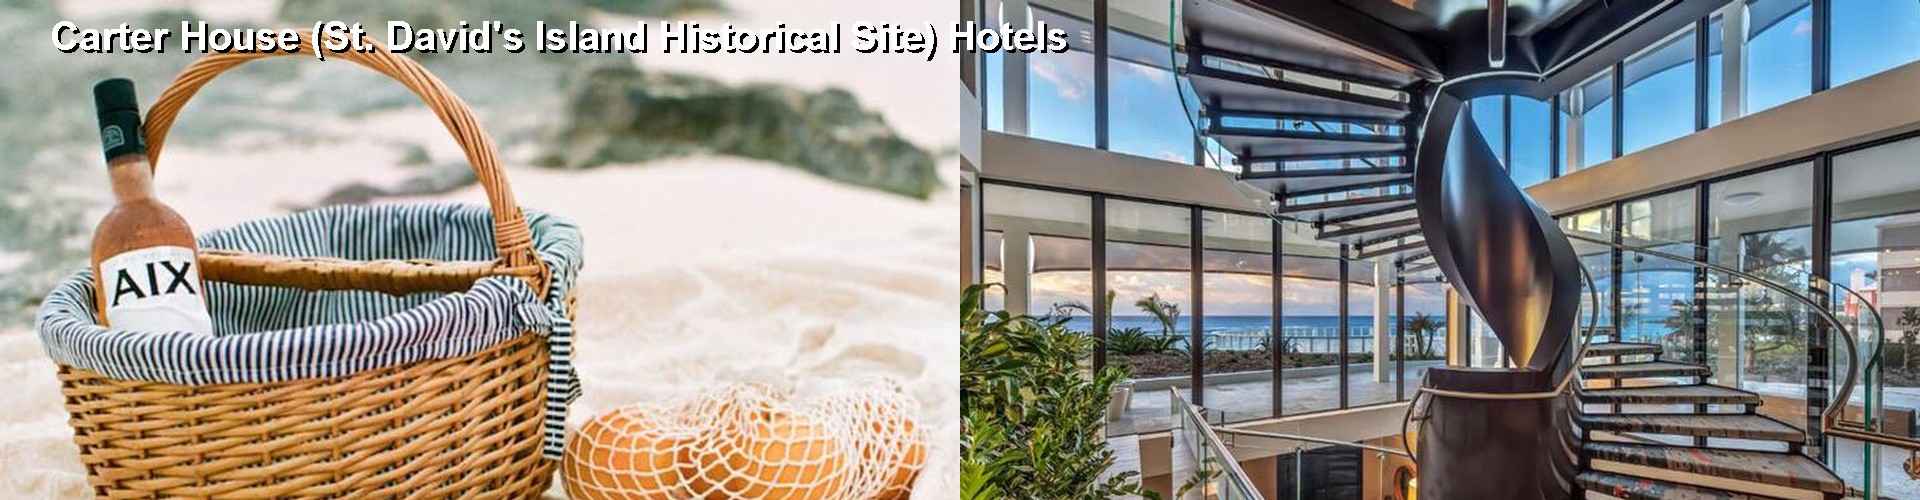 5 Best Hotels near Carter House (St. David's Island Historical Site)